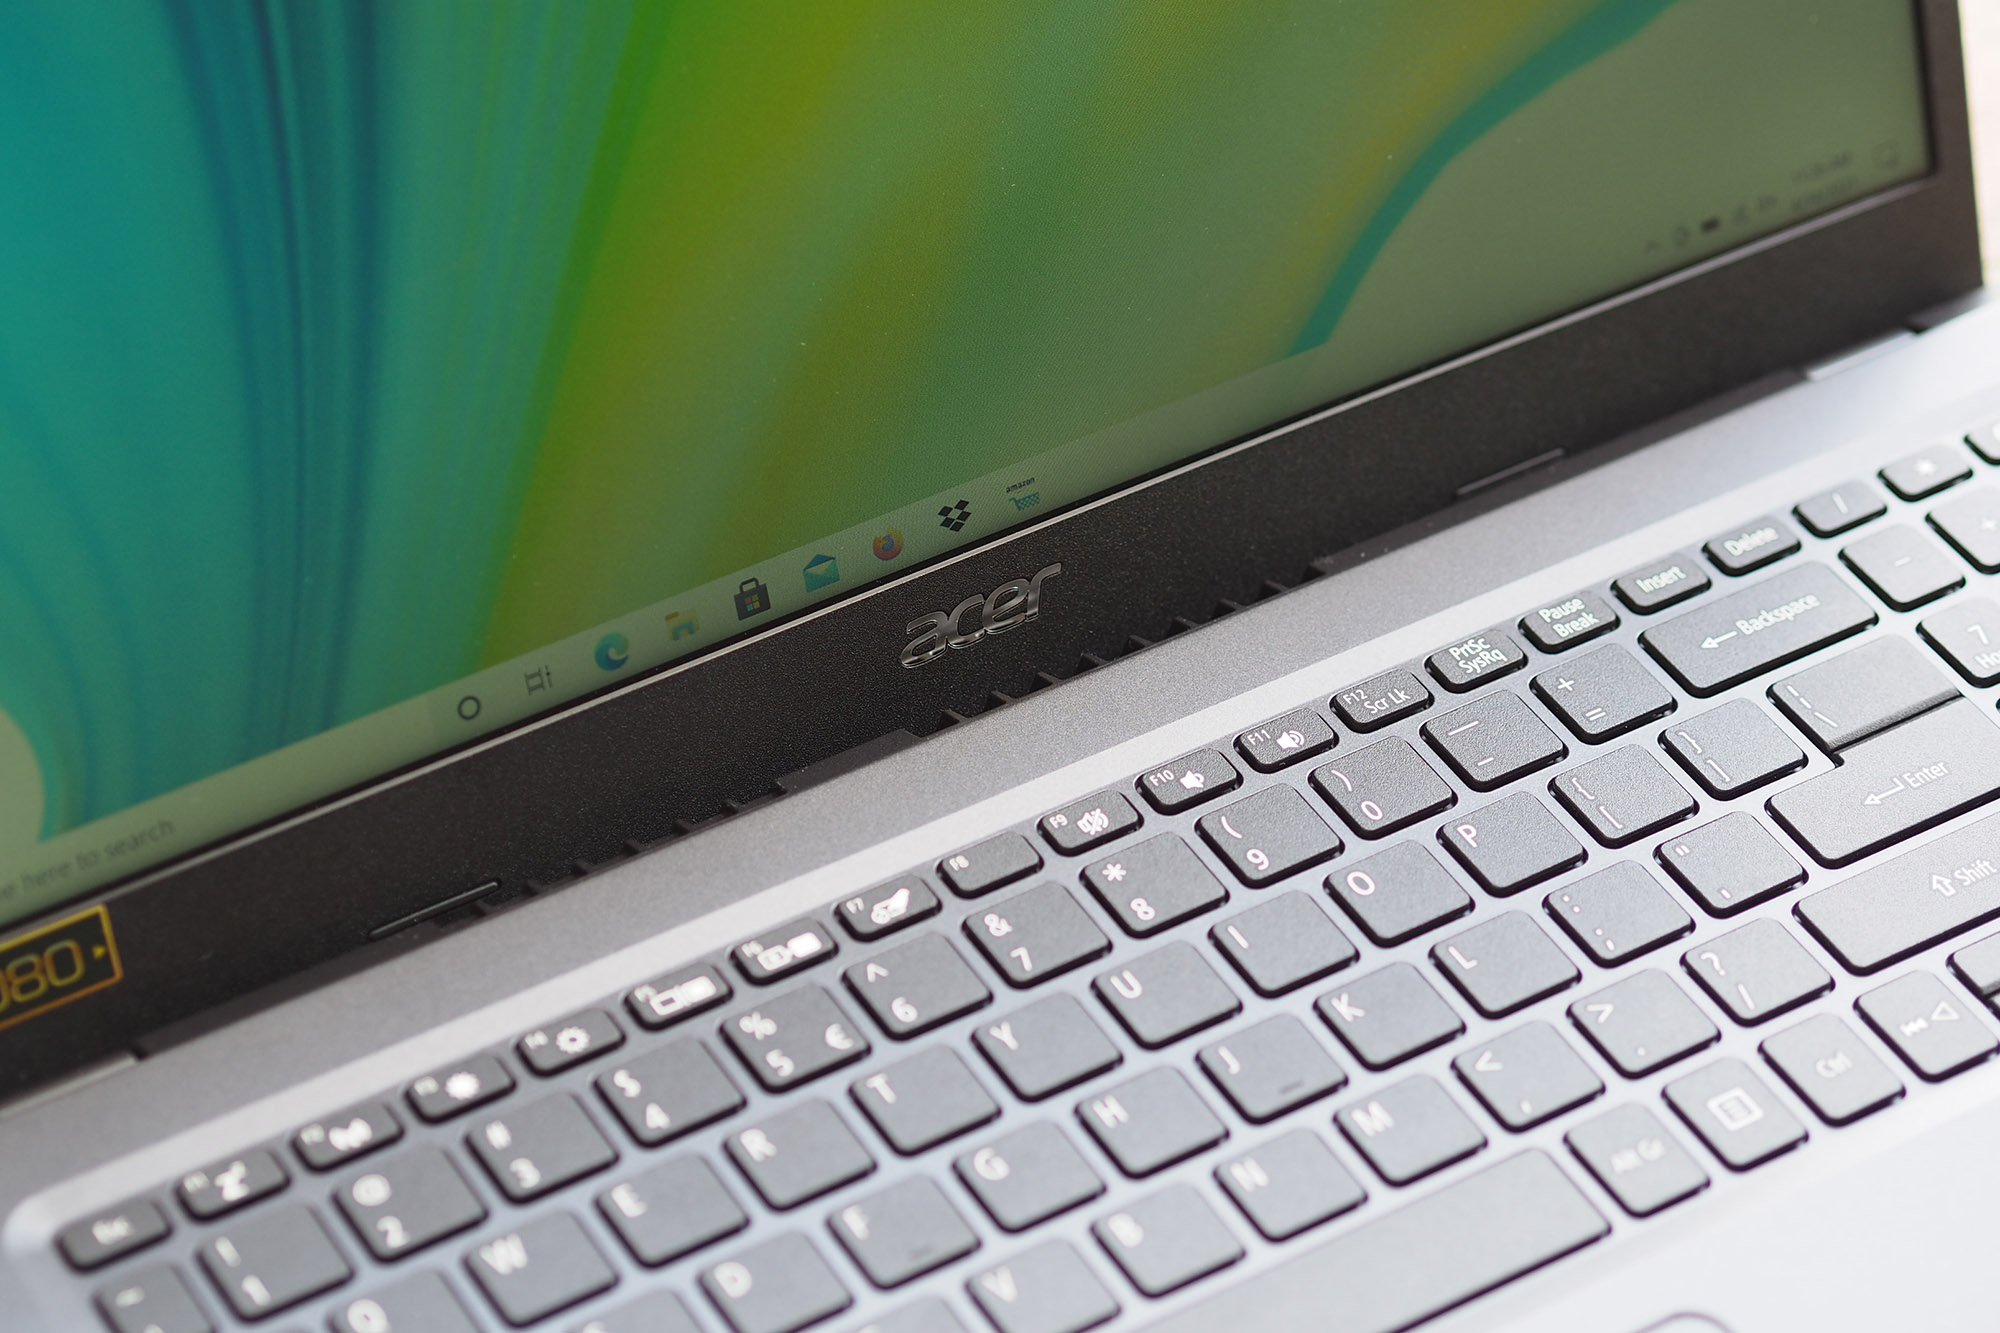 Acer Aspire 5 closeup shot of keyboard and screen